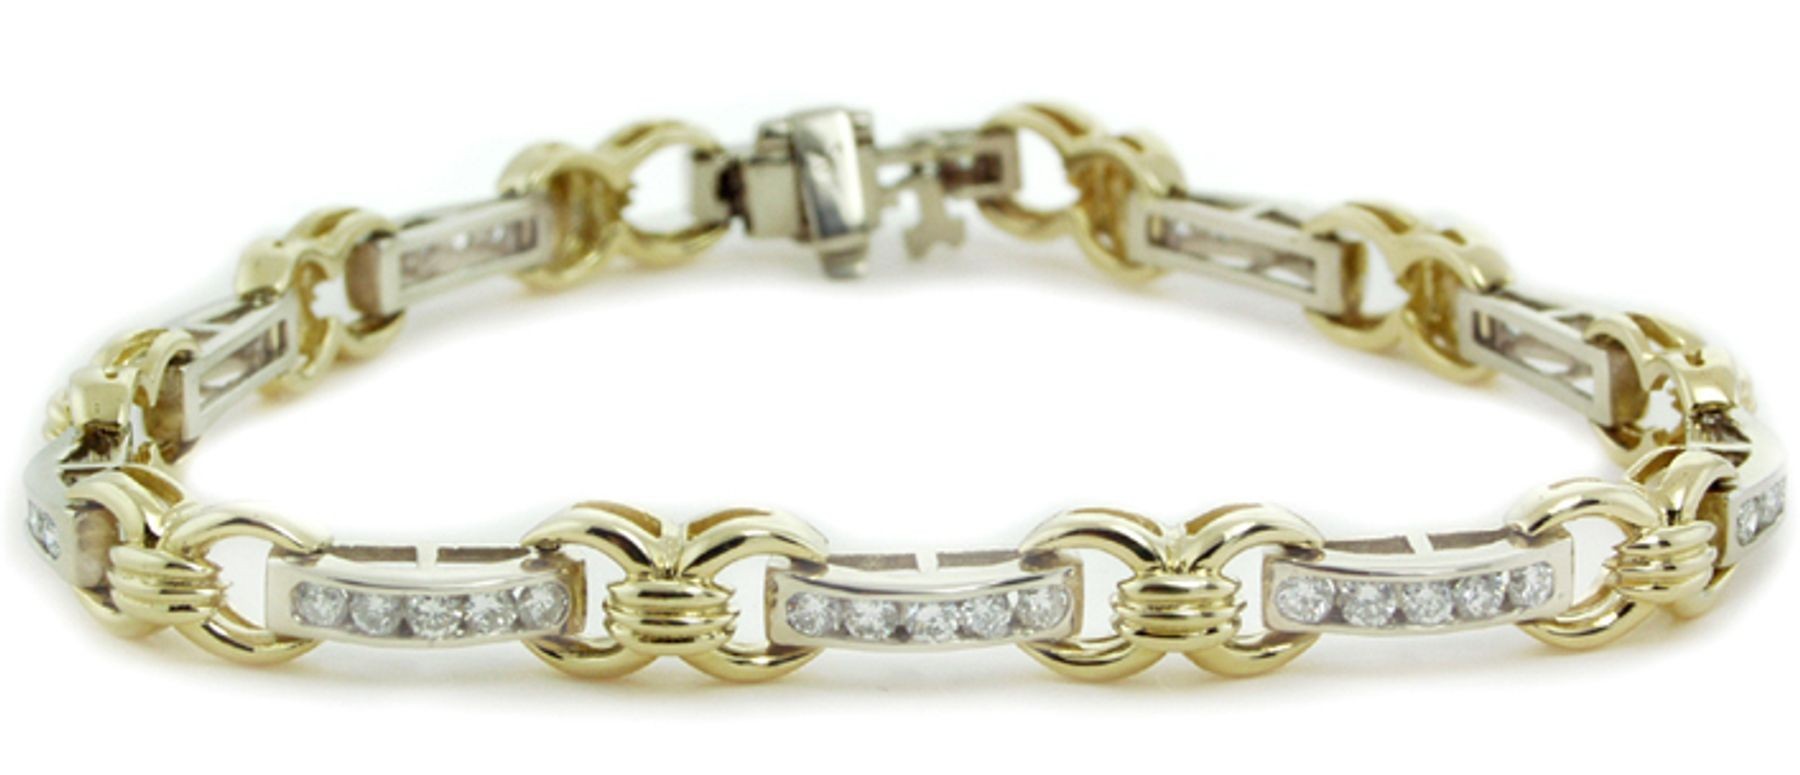 View diamond bracelets | Diamond Jewelry & Metal 